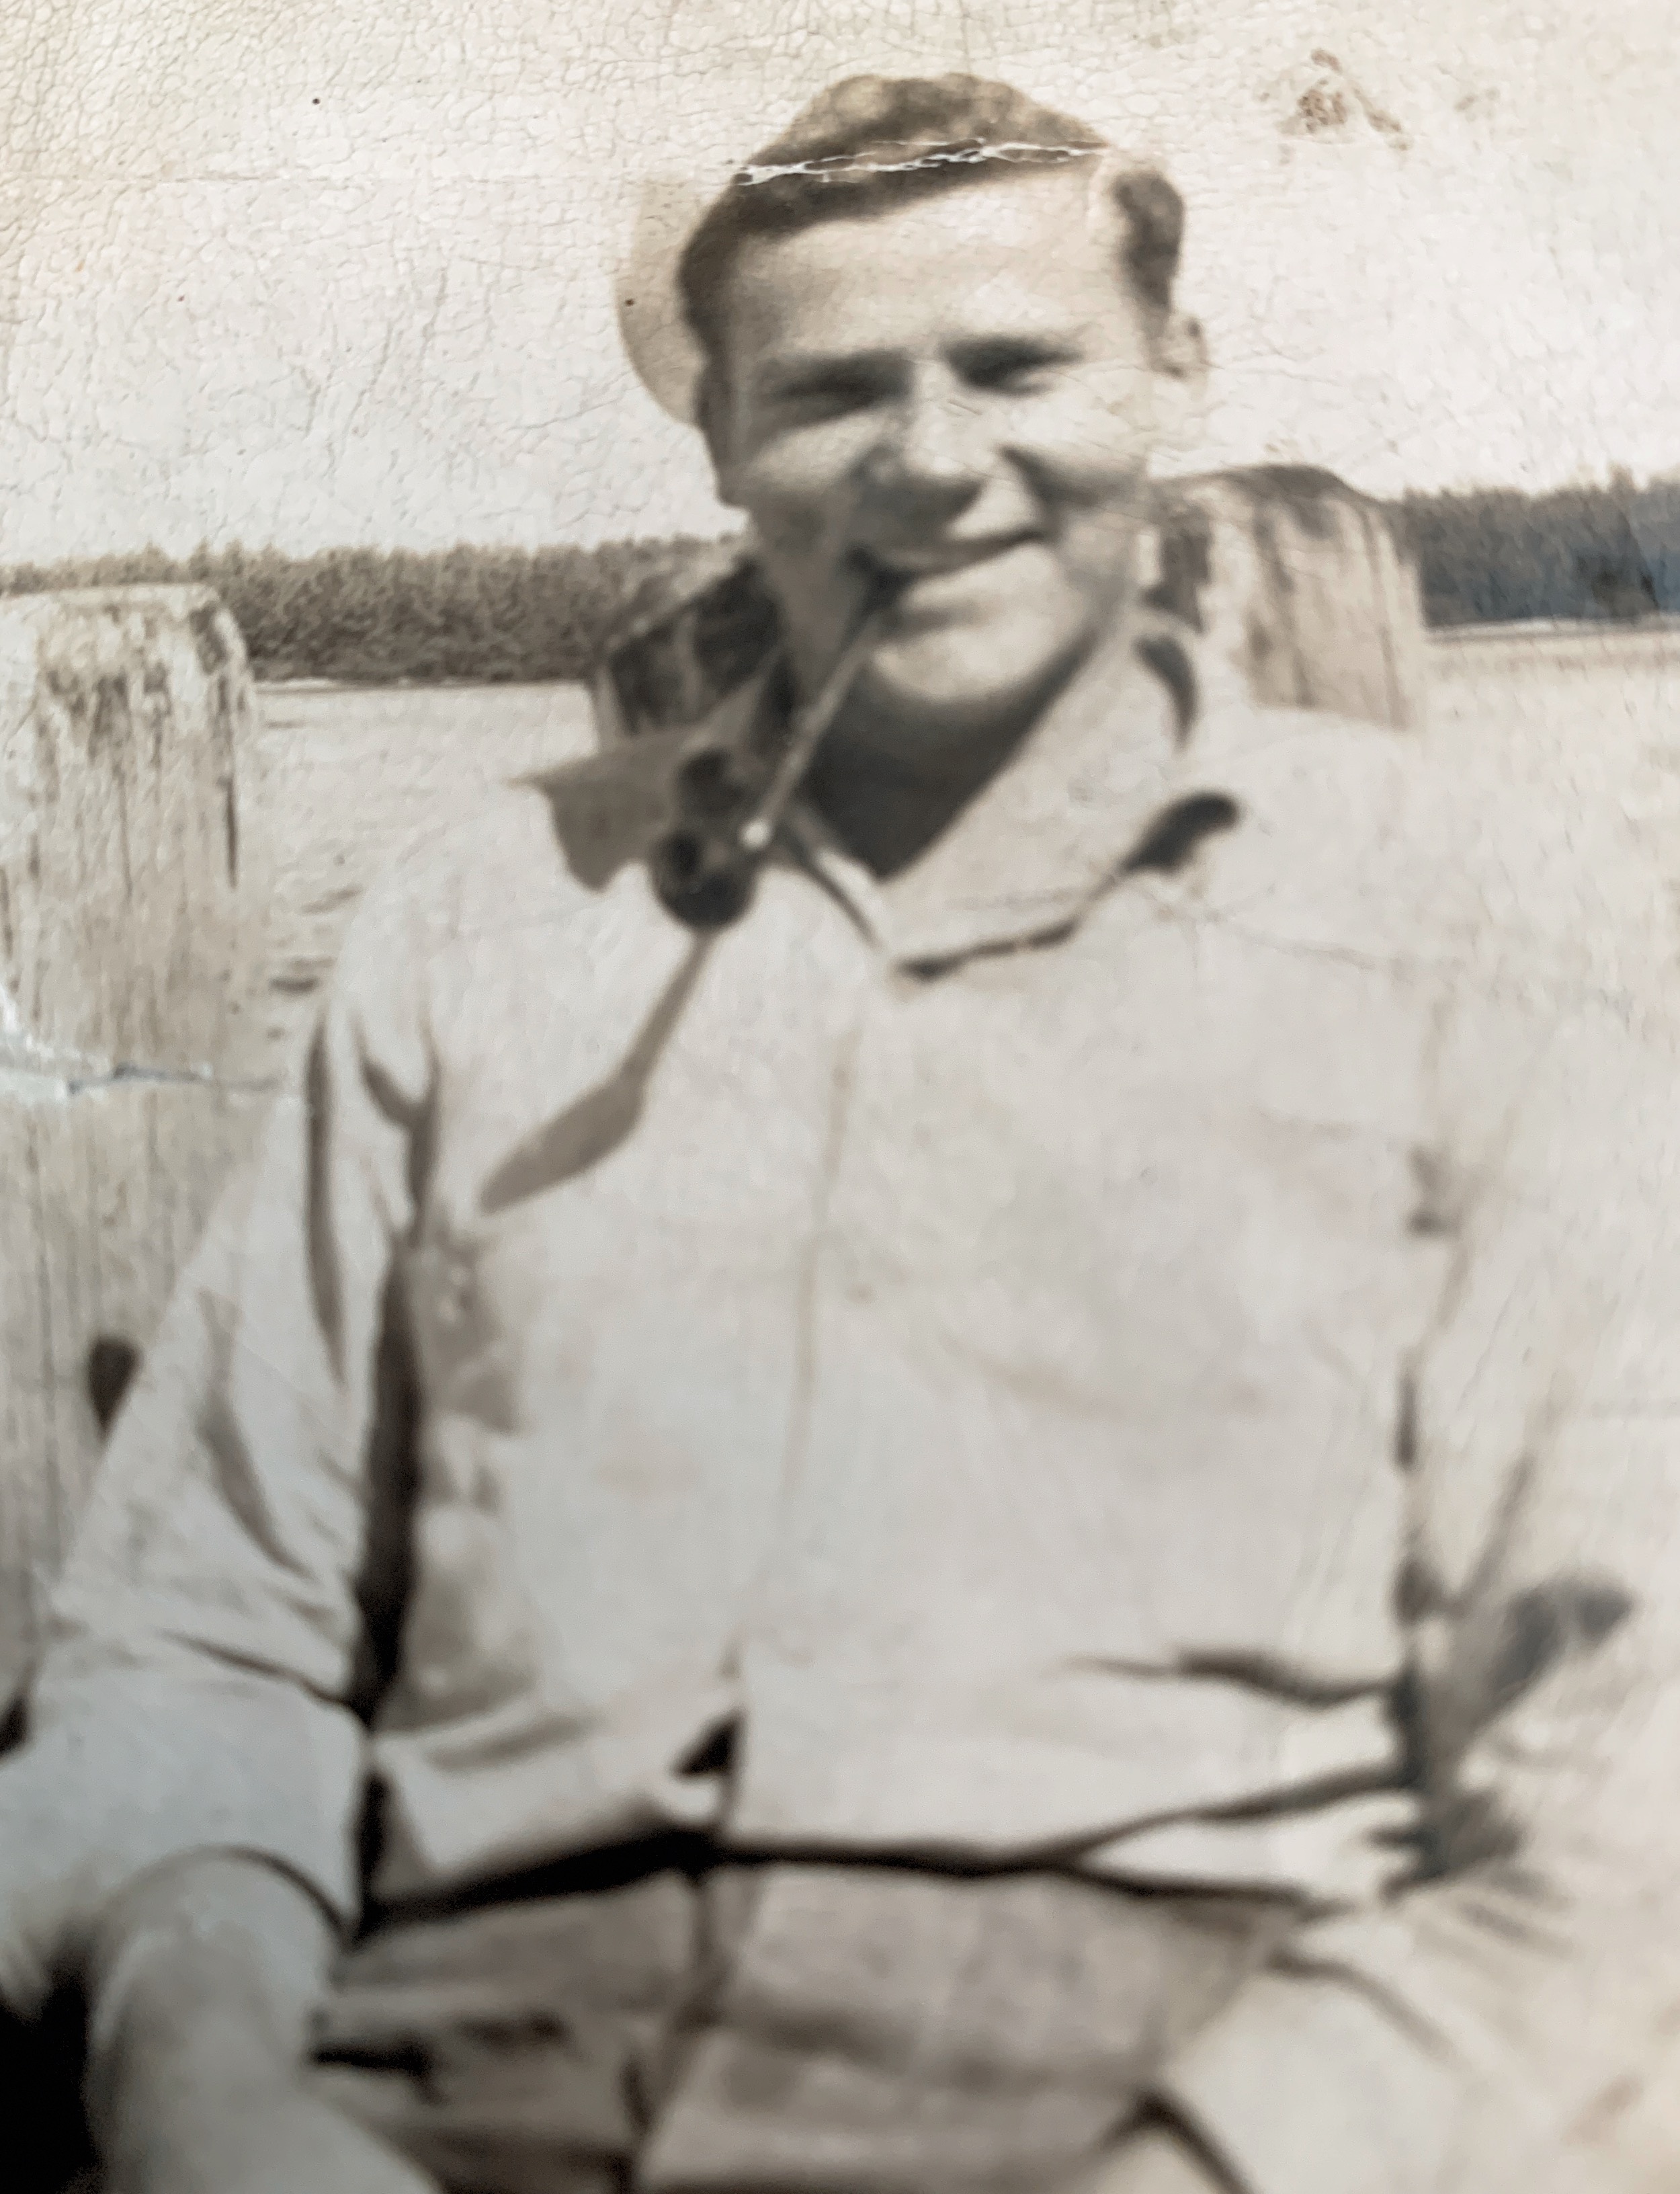 Robert Trindle (my dad, Bob) on his ship circa 1947